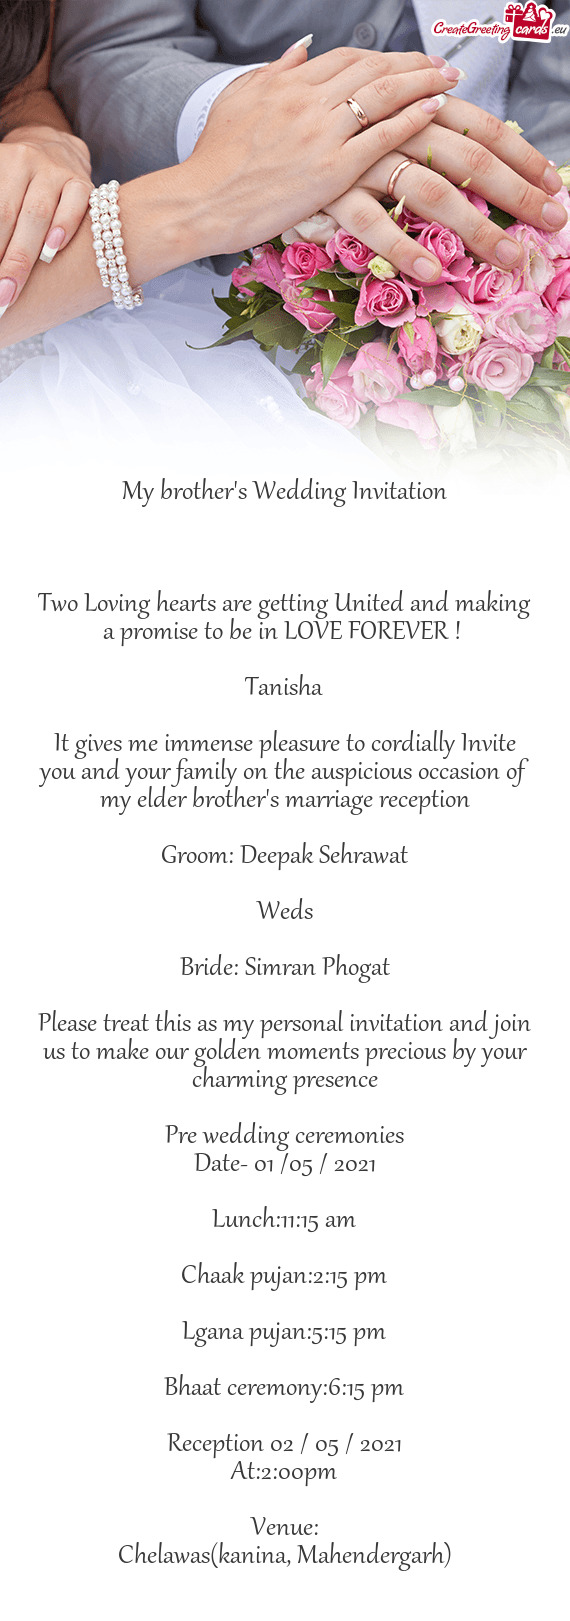 Bride: Simran Phogat